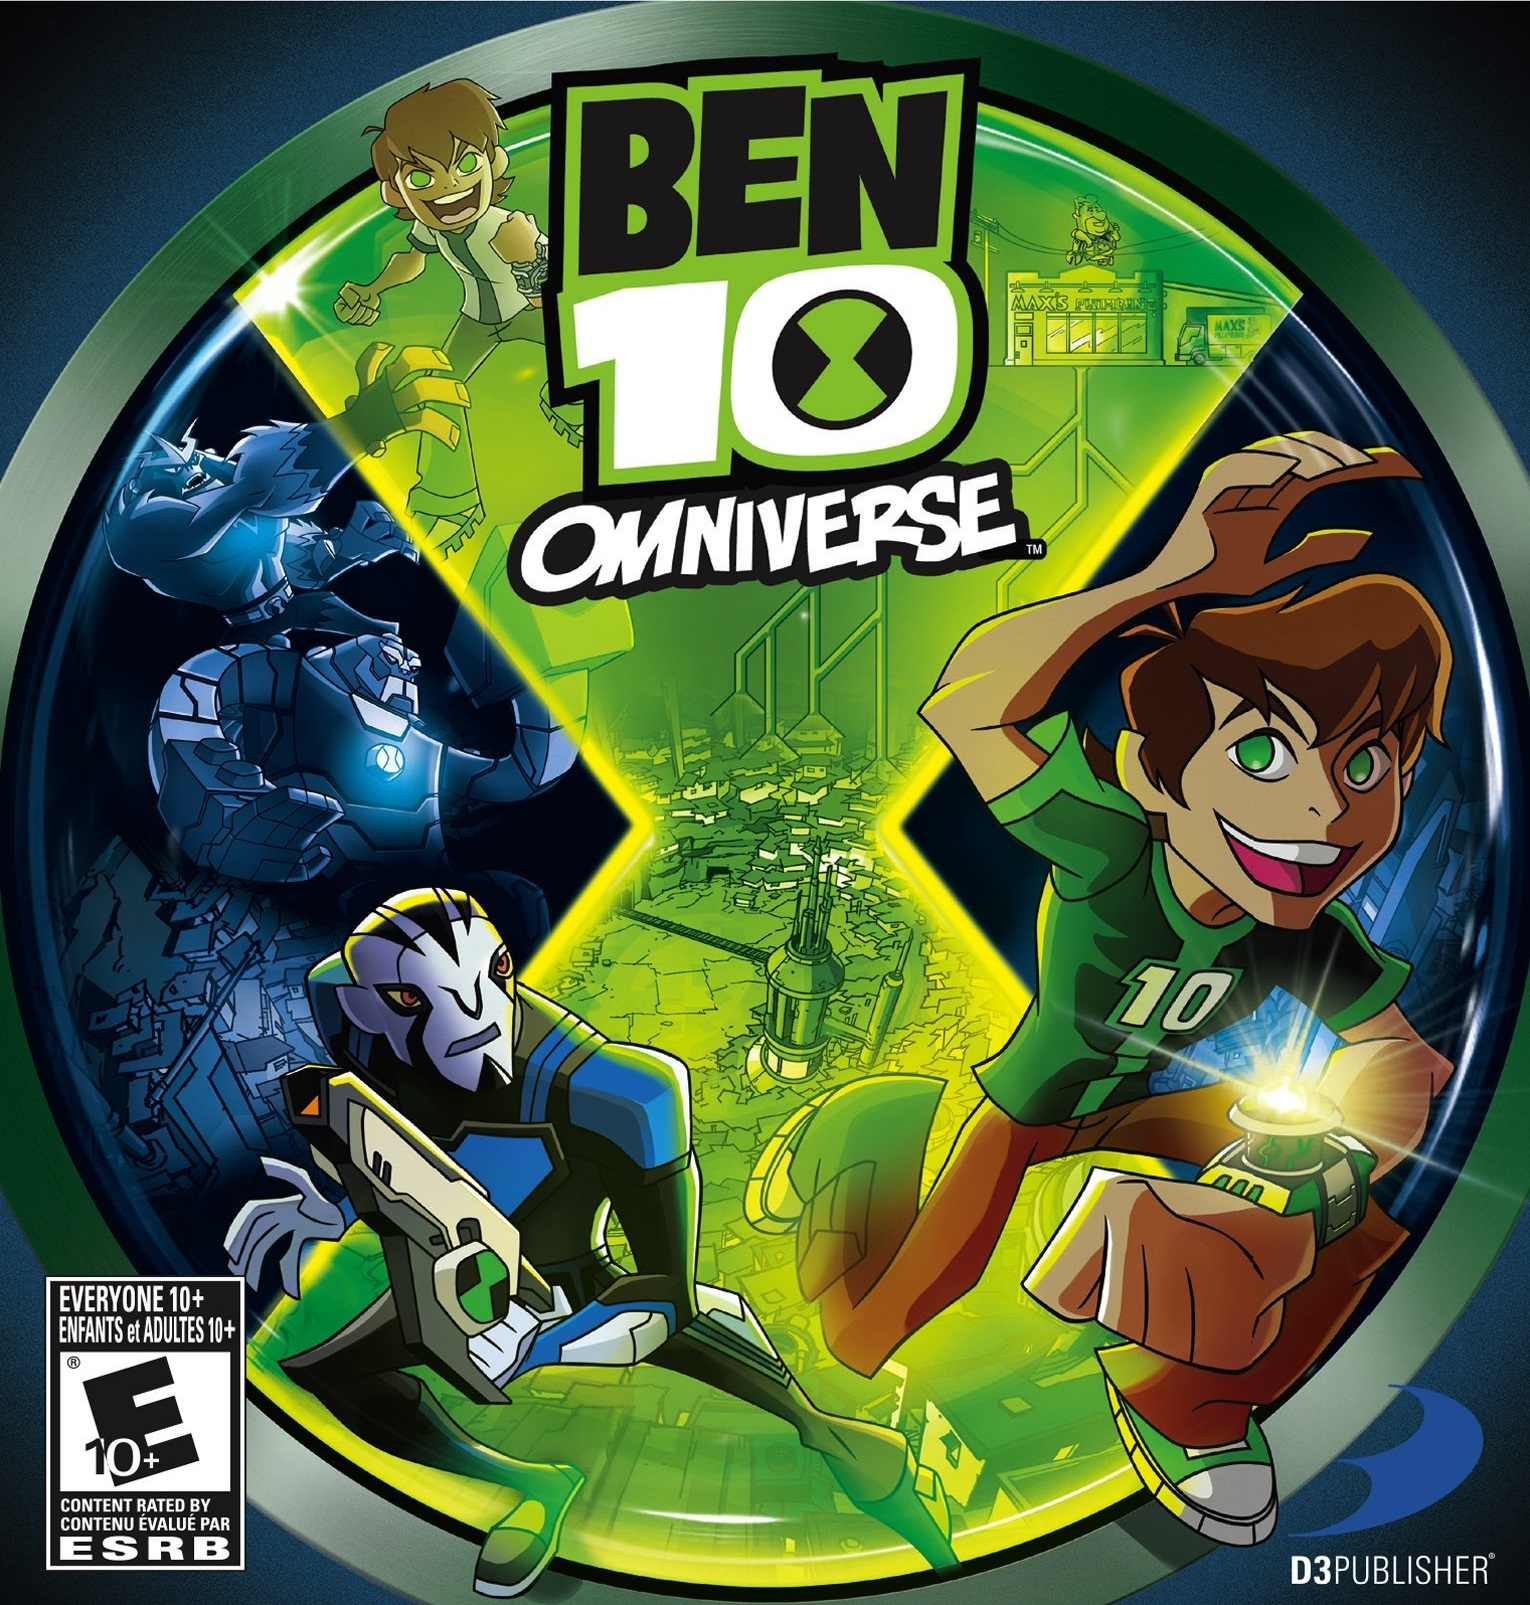 Ben 10: Jogos On-line do Ben 10